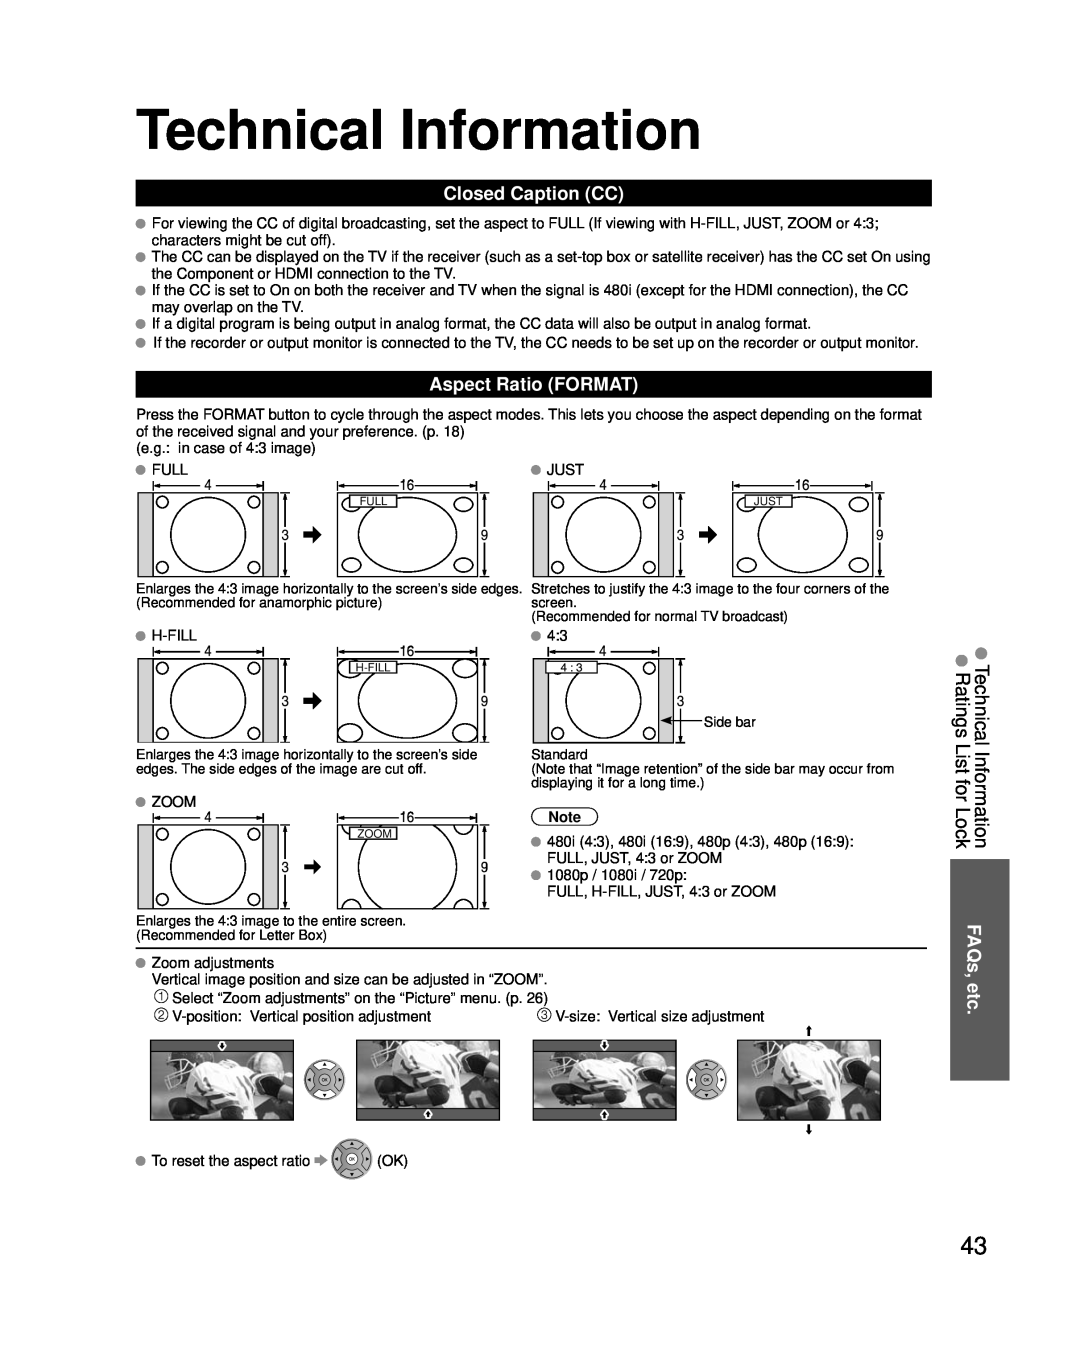 Panasonic TC-P50U2 Technical Information, Closed Caption CC, Aspect Ratio FORMAT, FAQs, etc, Technical Ratings List for 